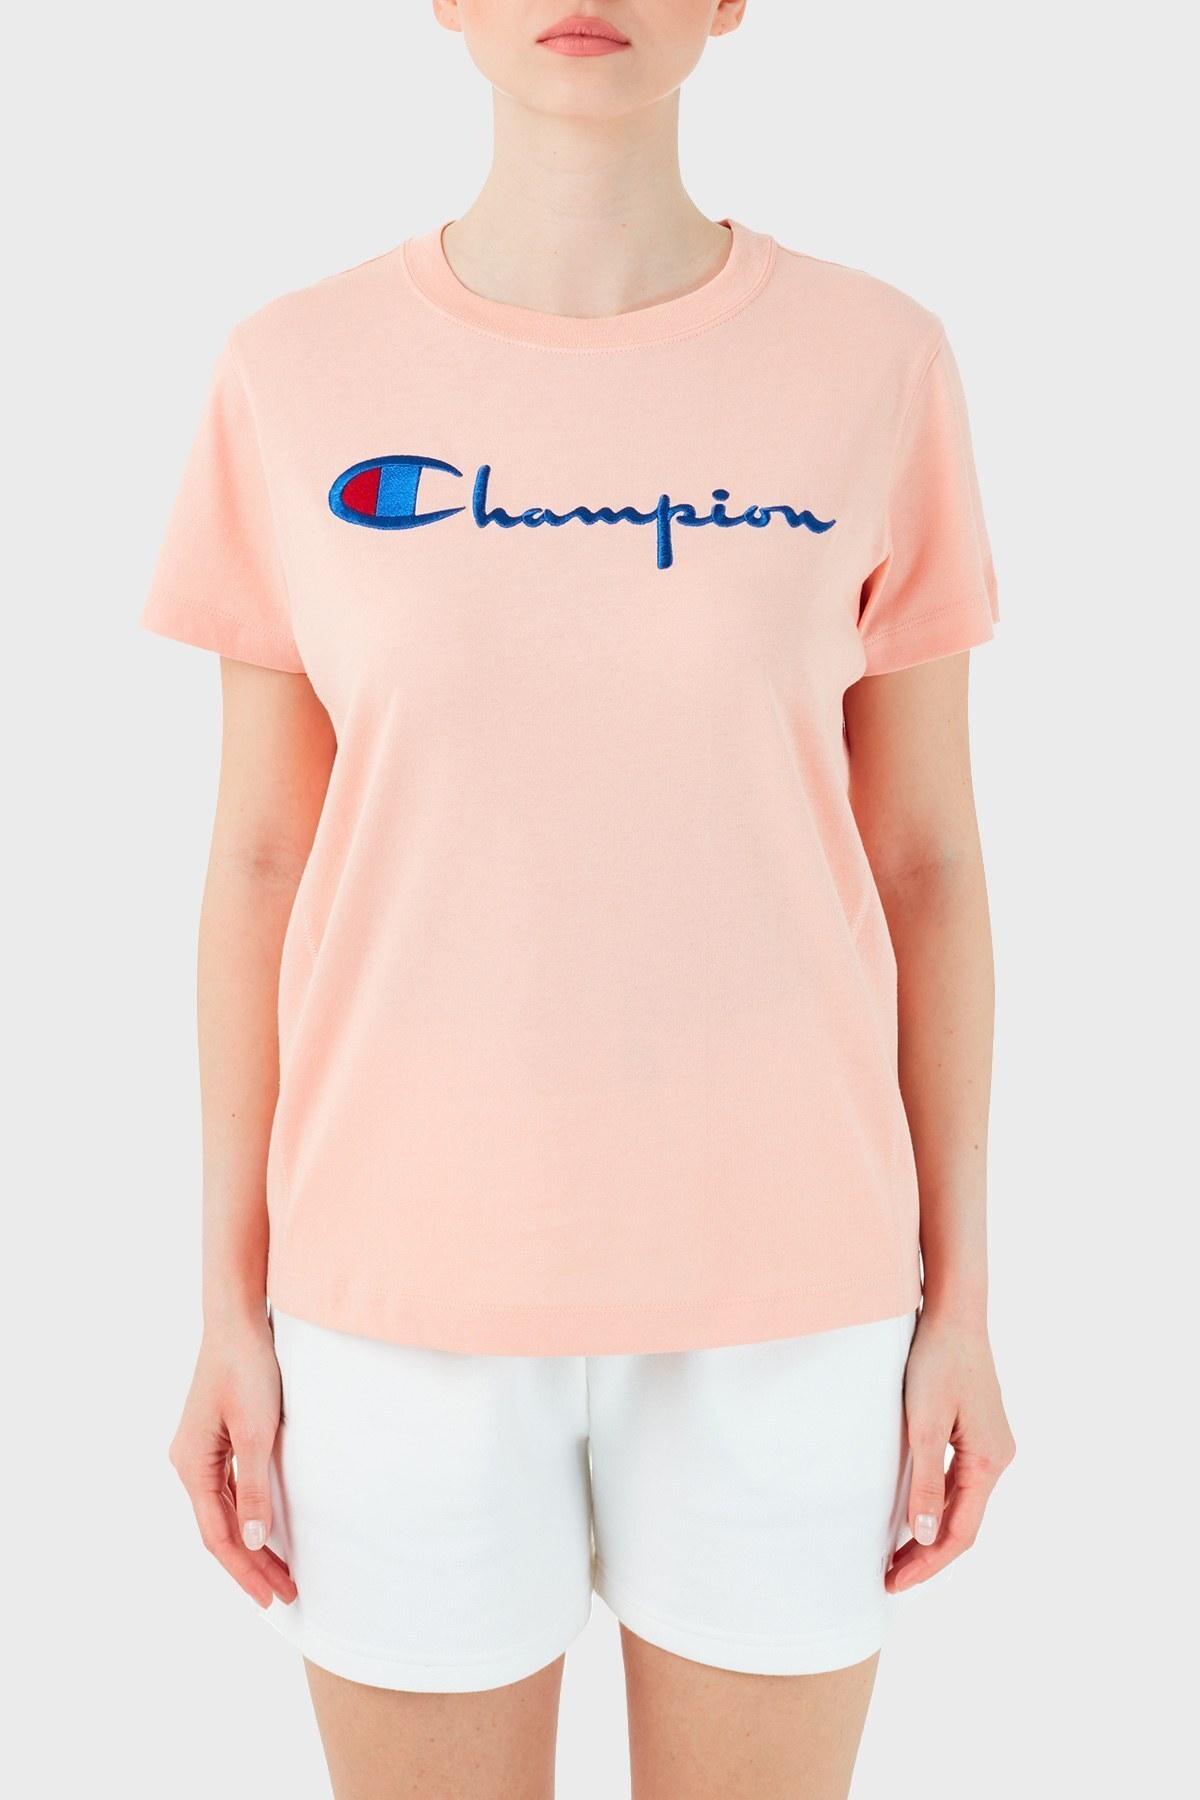 Champion Logo Baskılı Bisiklet Yaka % 100 Pamuk Bayan T Shirt 110992 CPK PS138 PUDRA